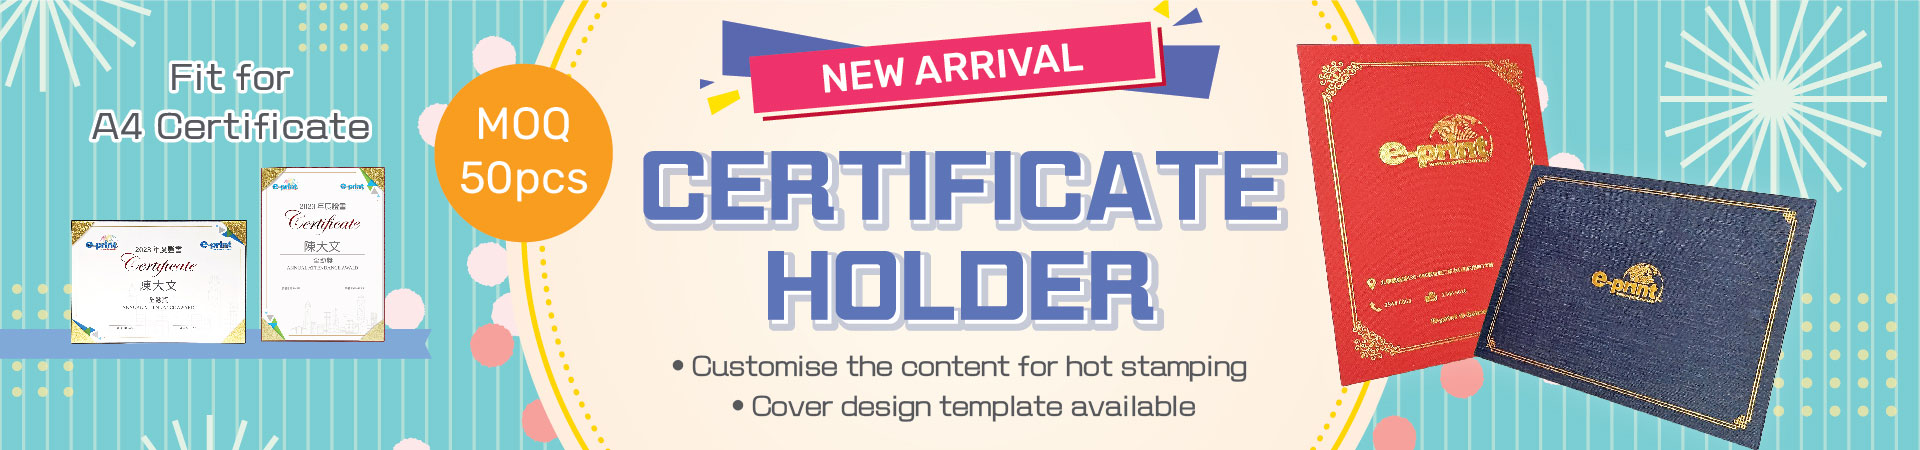 Certificate Holder / Certificate cover